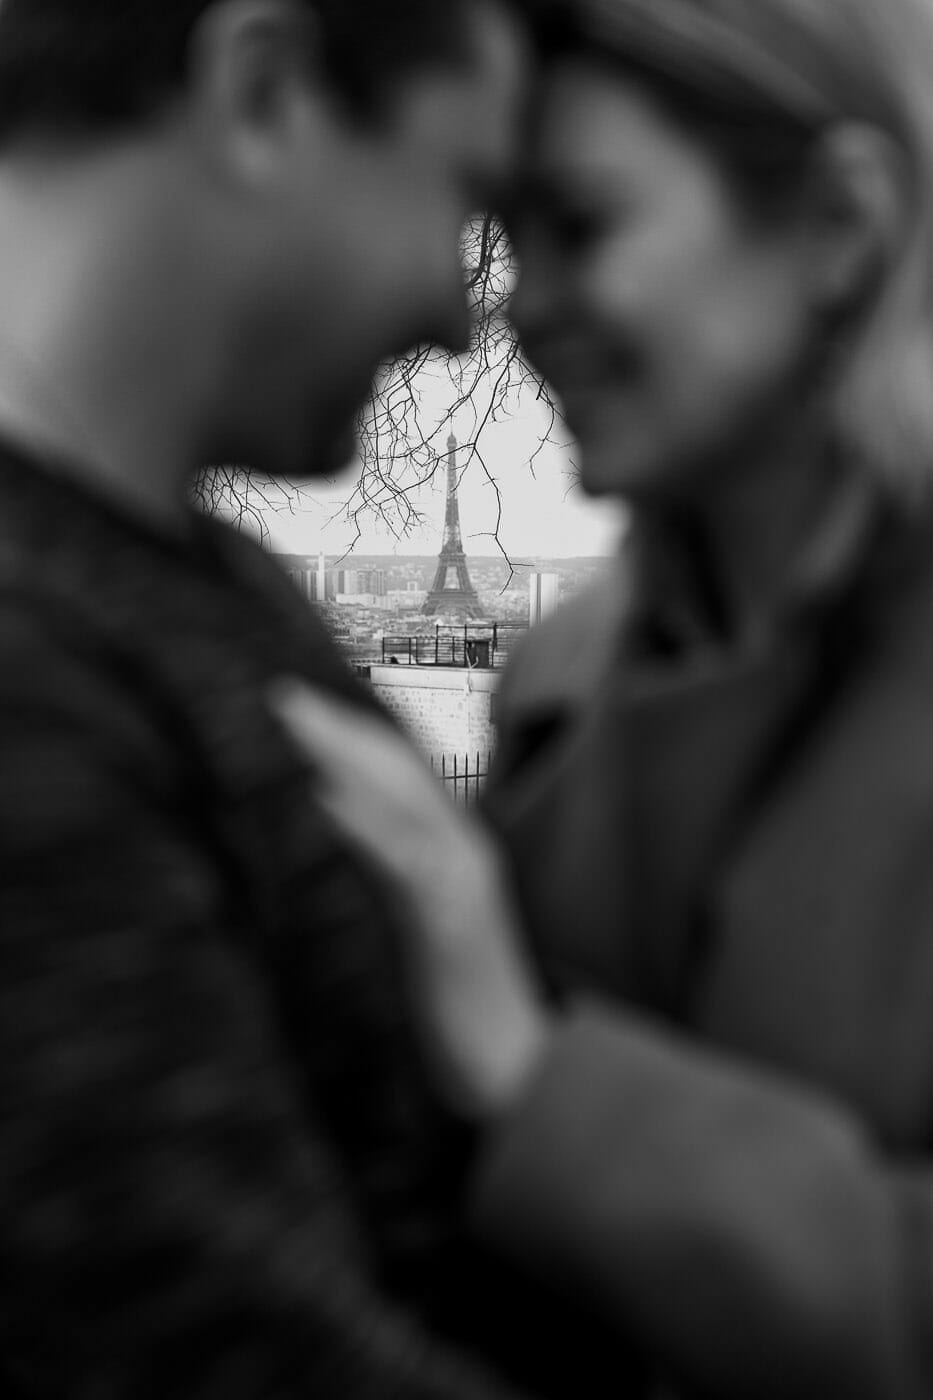 Creative Paris engagement photos with Eiffel Tower as focus